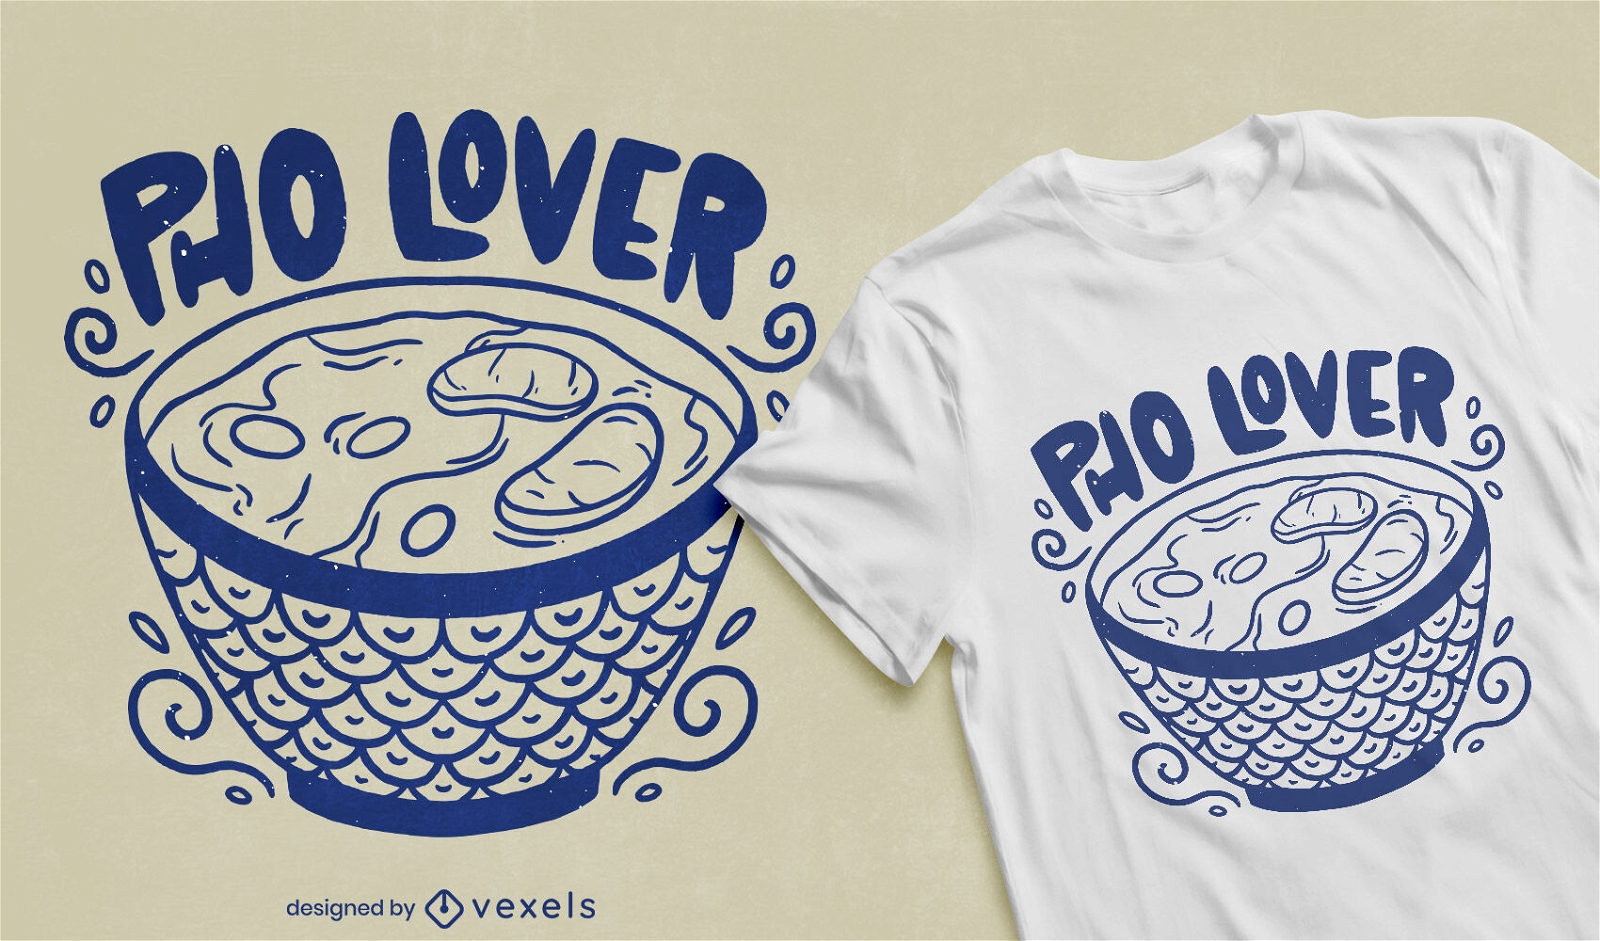 Pho lover Vietnamese food t-shirt design